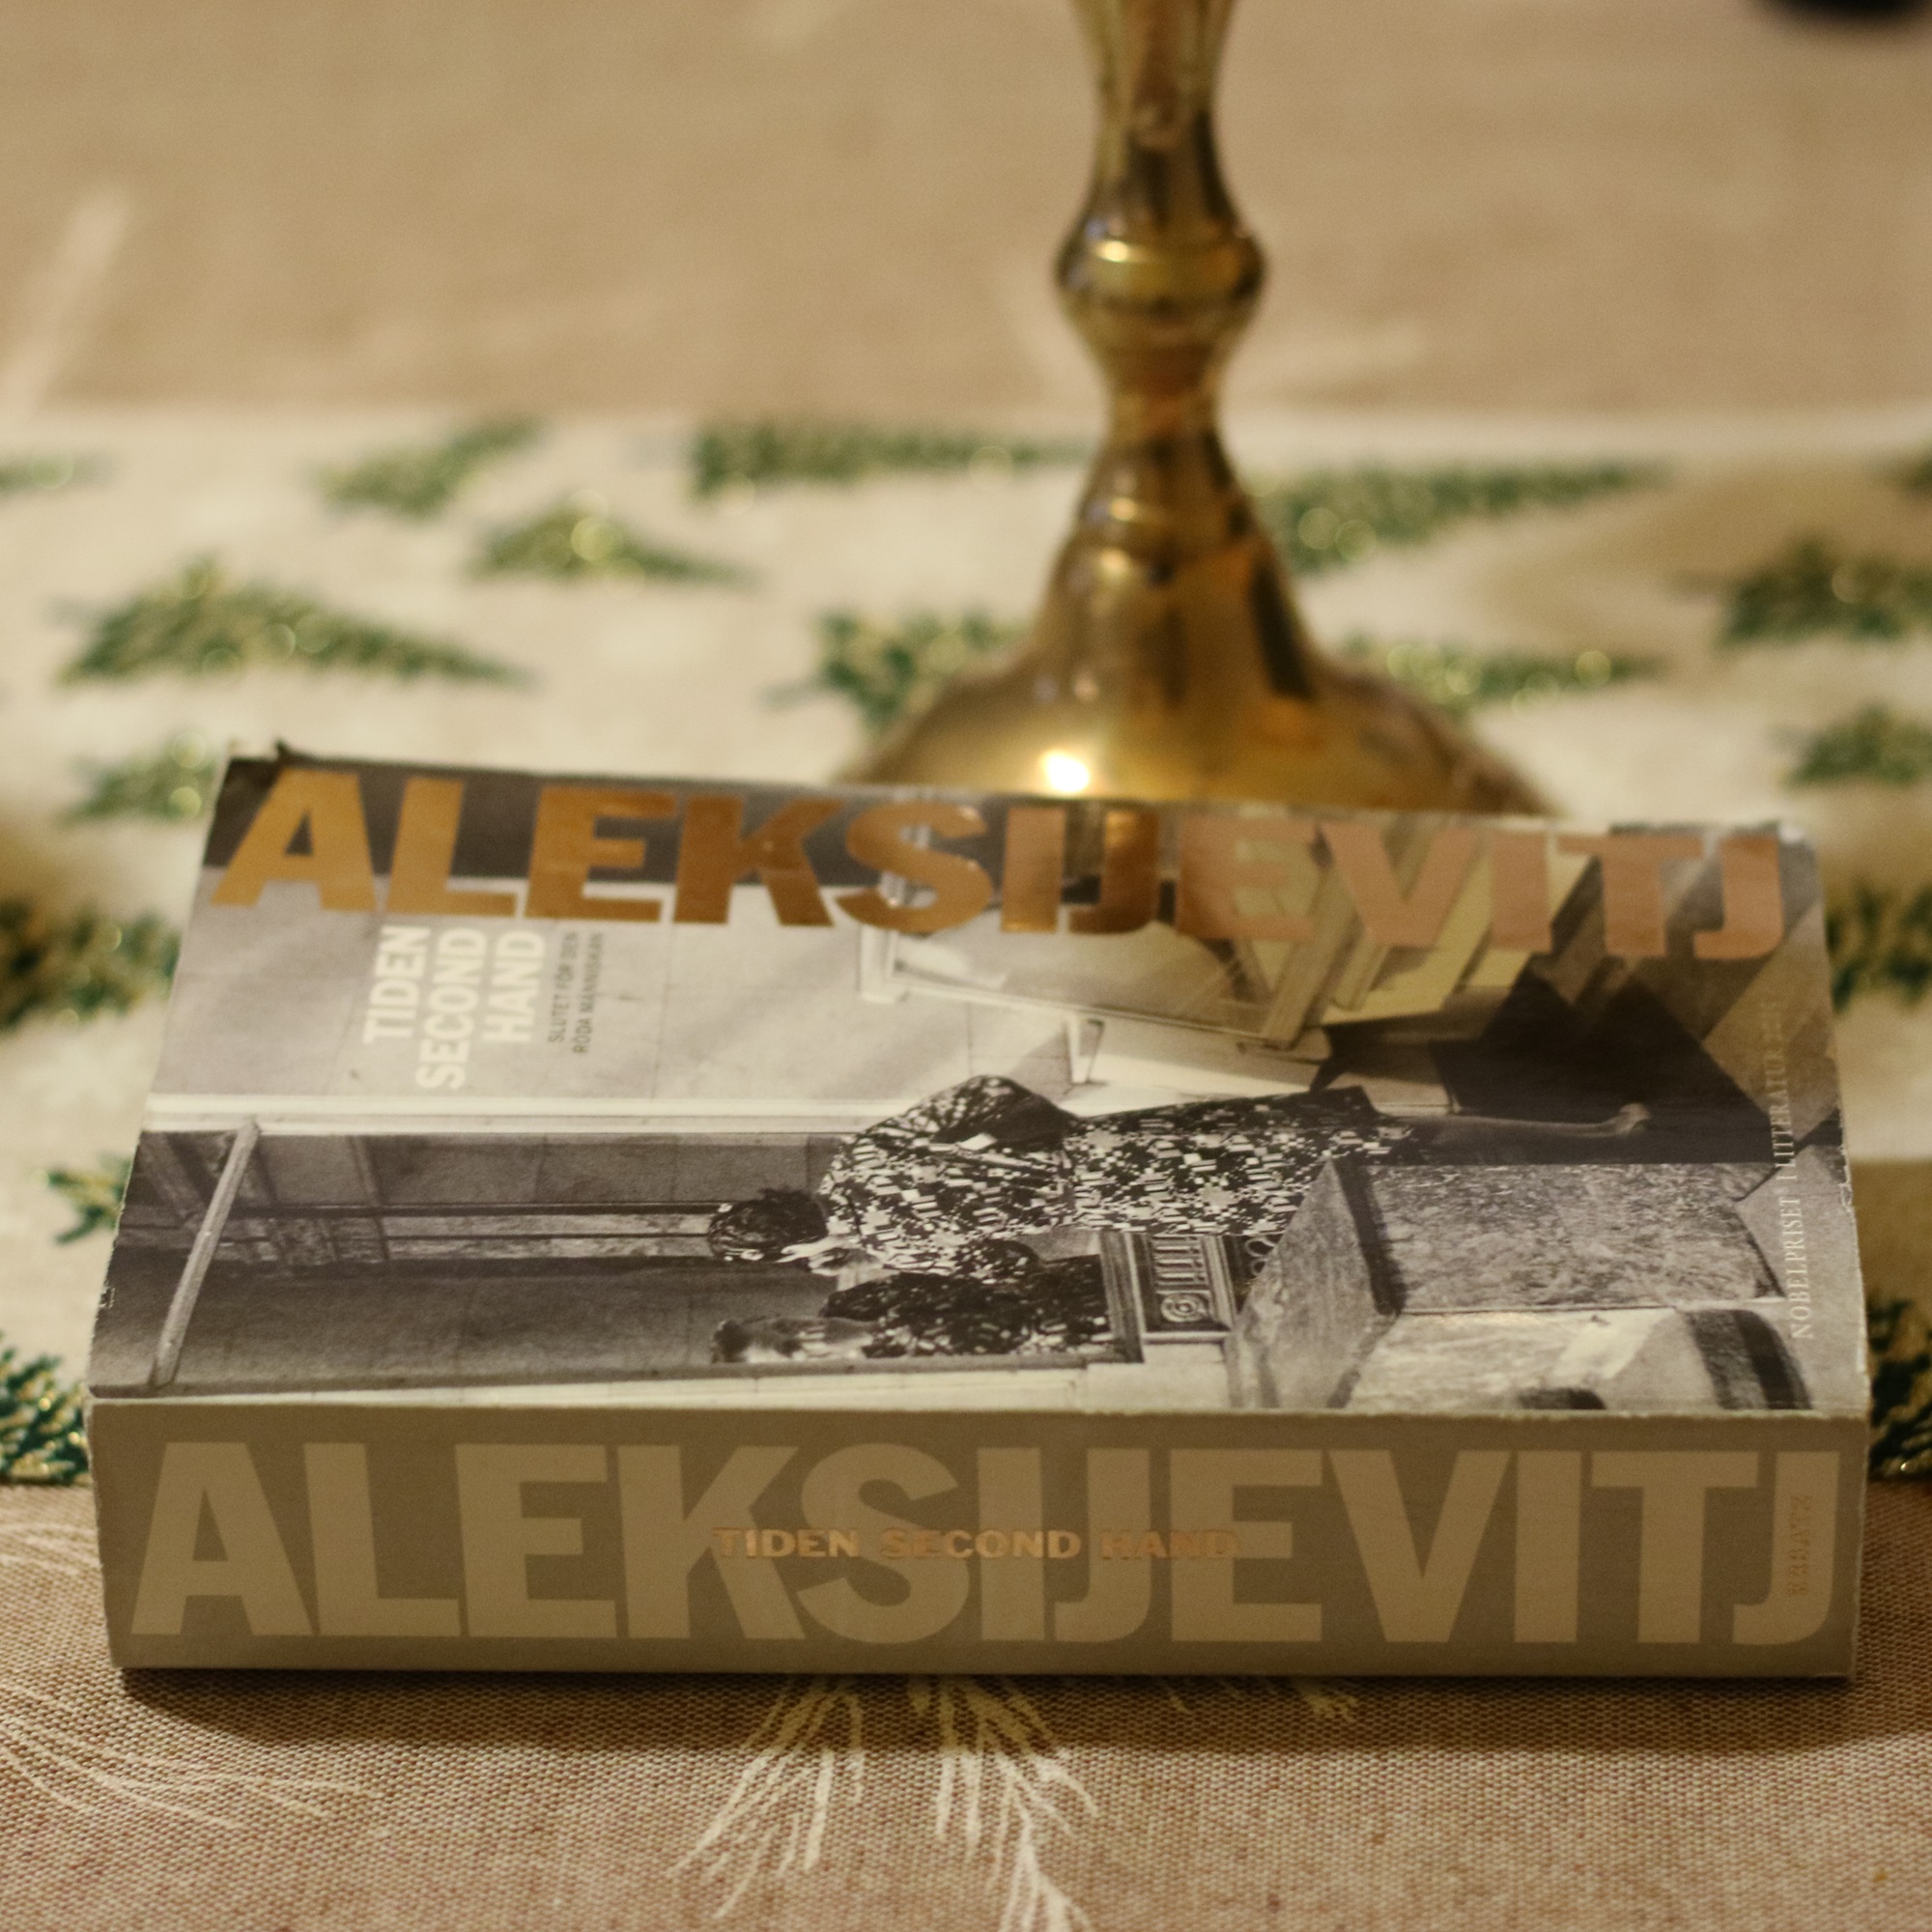 Tiden second hand av Svetlana Aleksijevitj